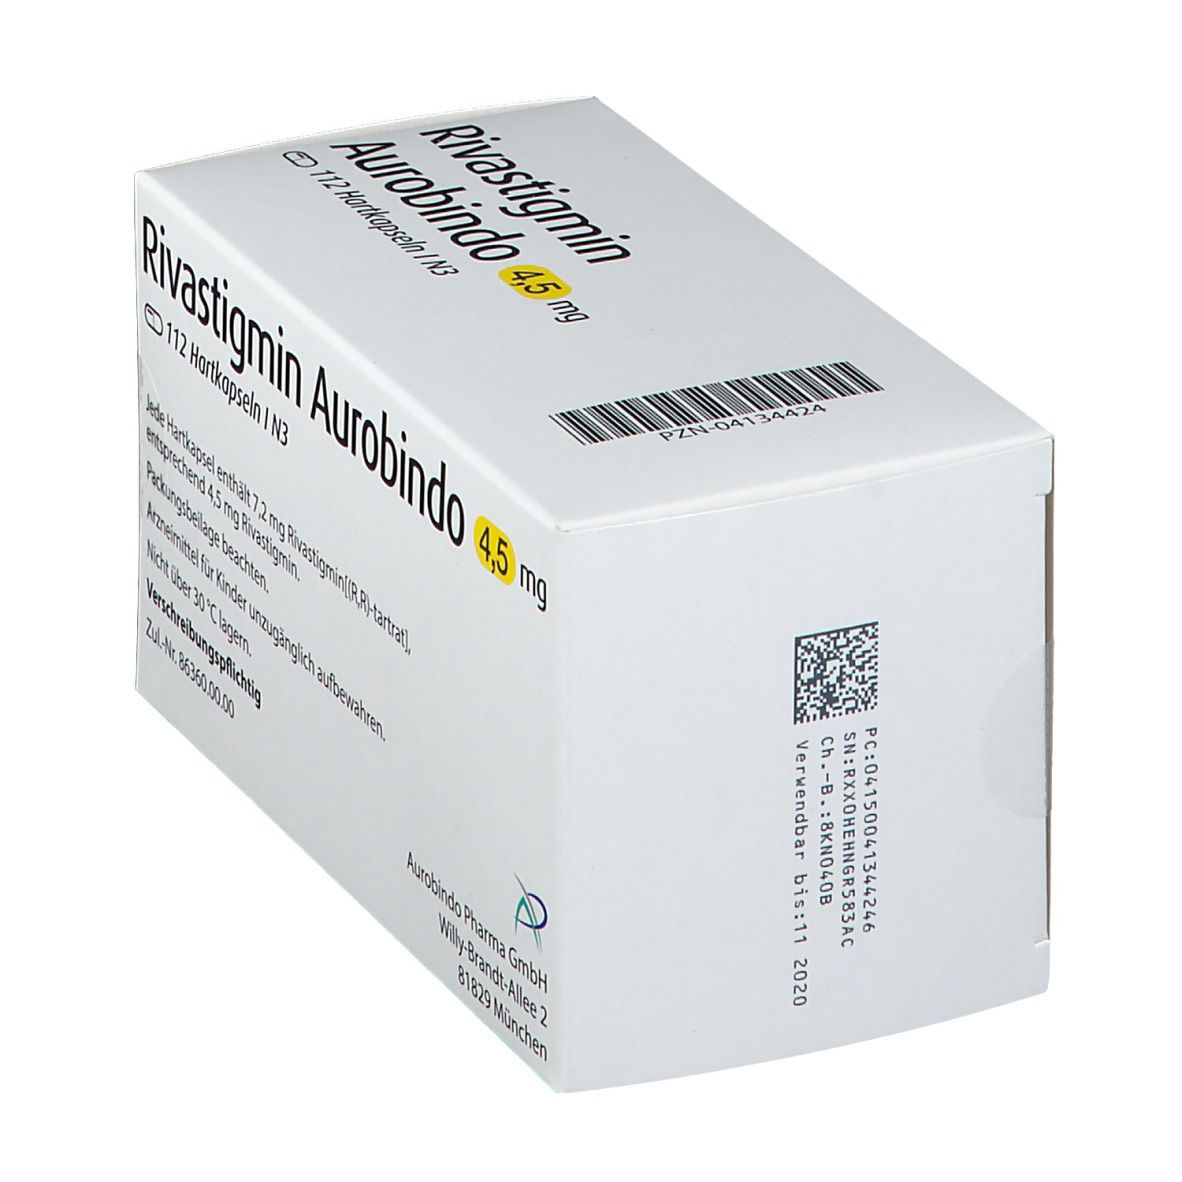 Rivastigmin Aurobindo 4,5 mg